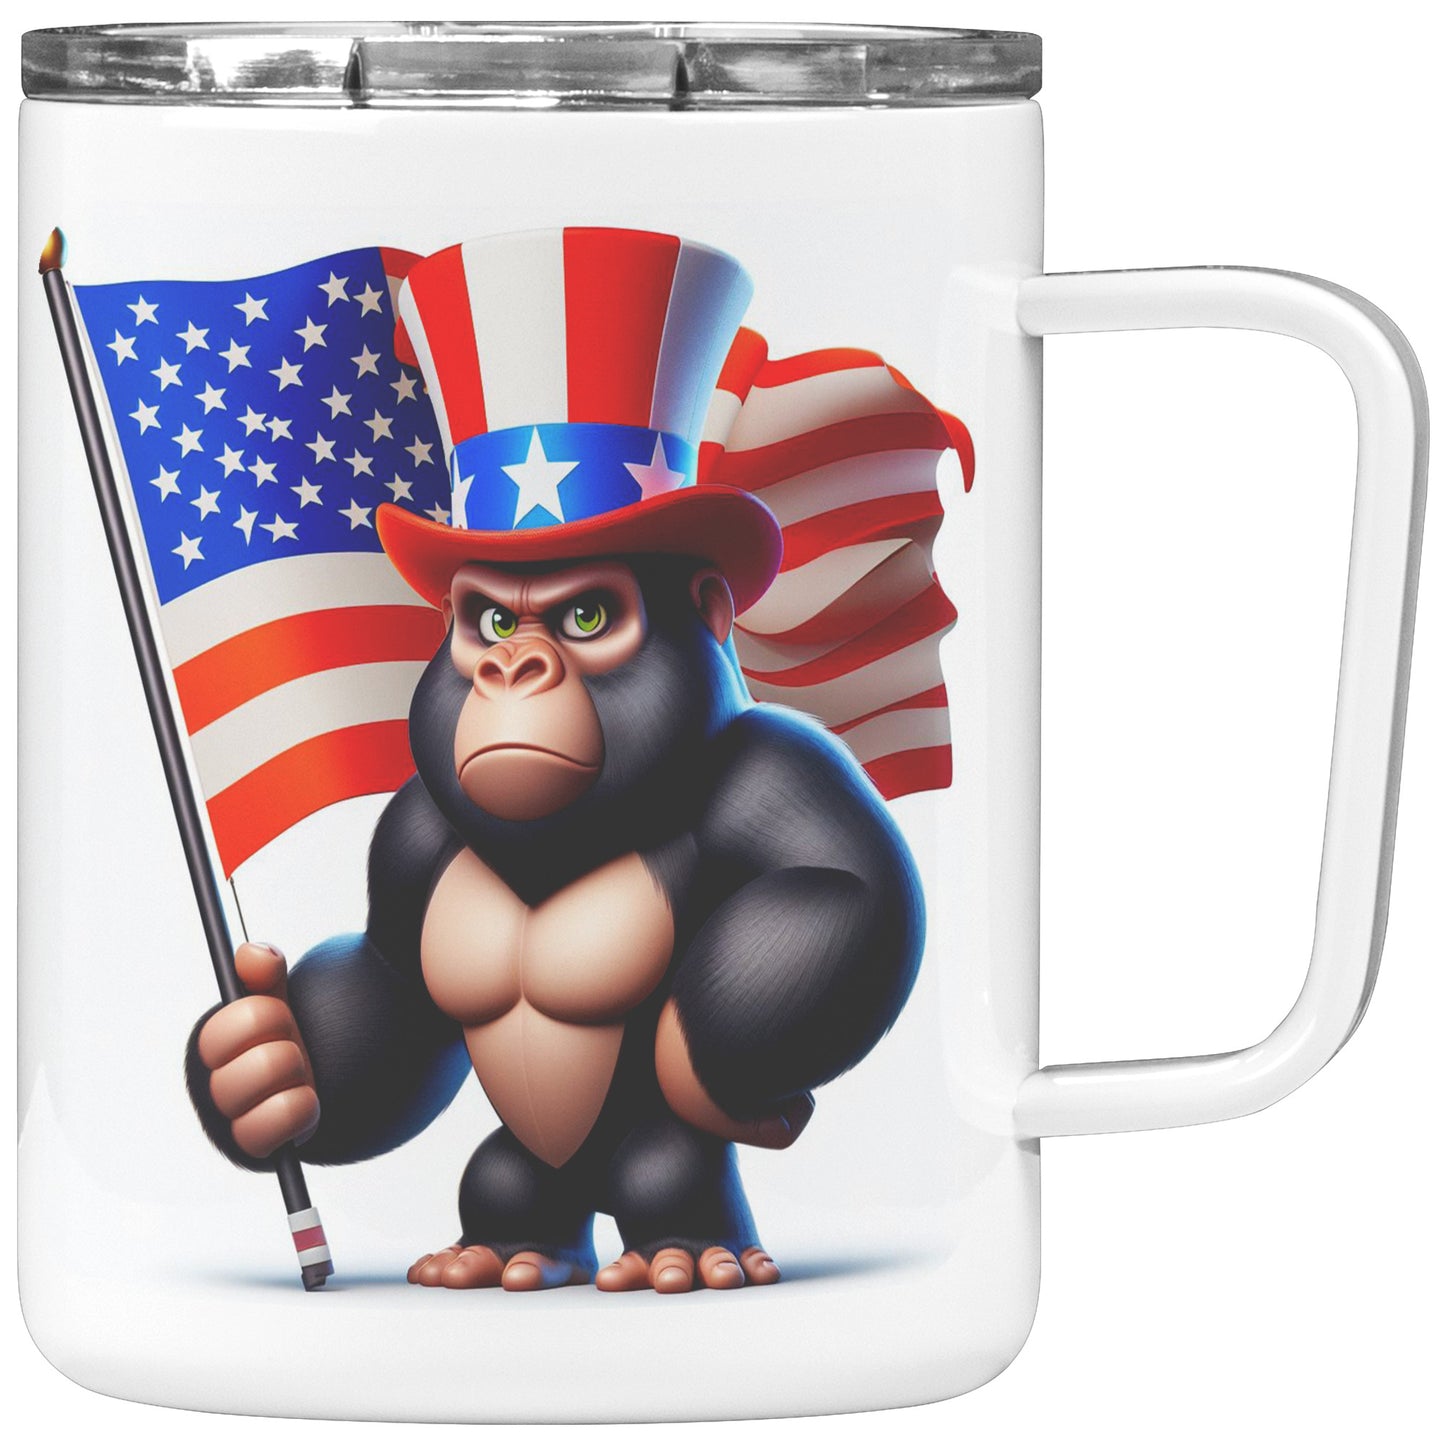 Grumpy Gorilla - Insulated Coffee Mug #9